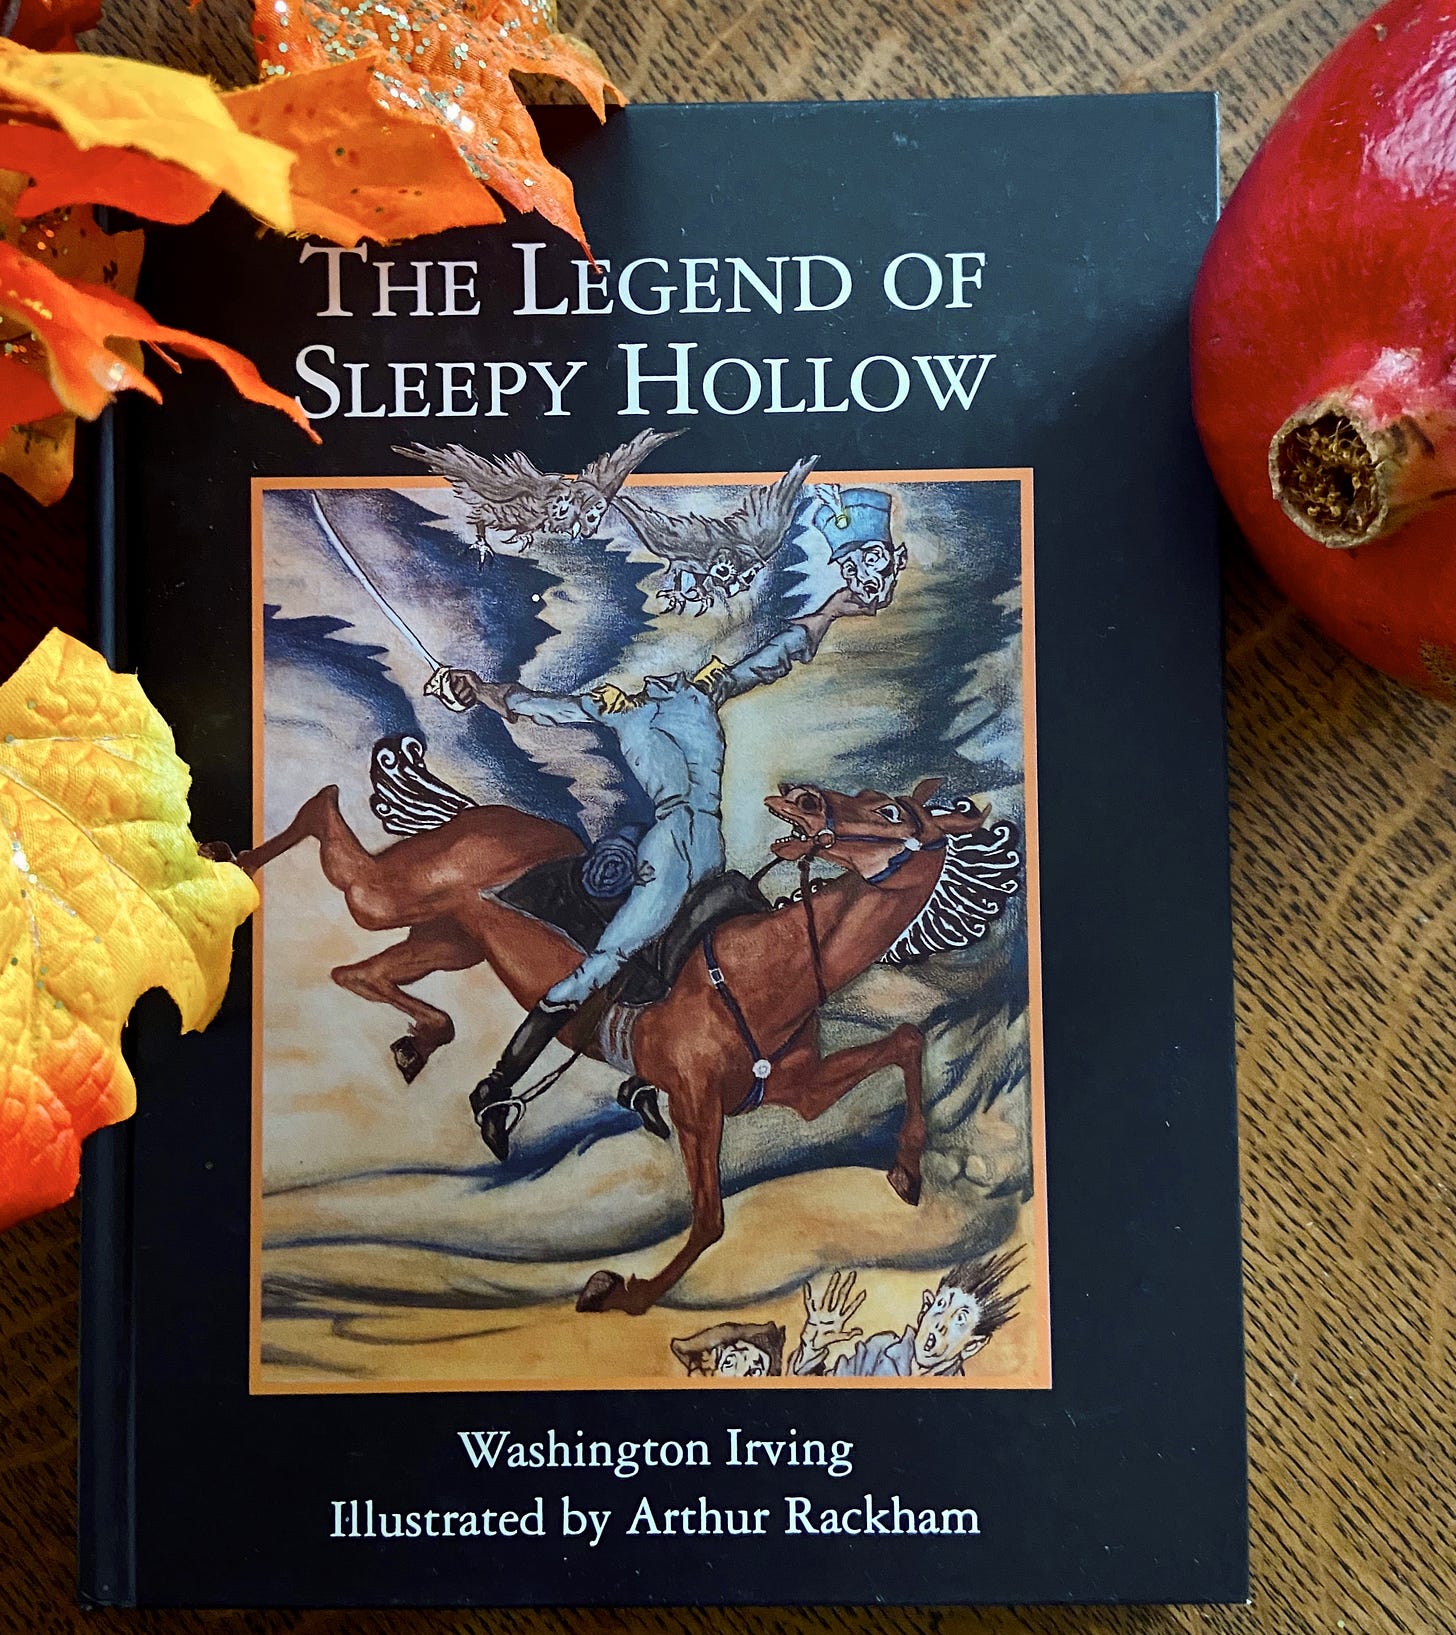 The Legend of Sleepy Hollow book illustrated by Arthur Rackham